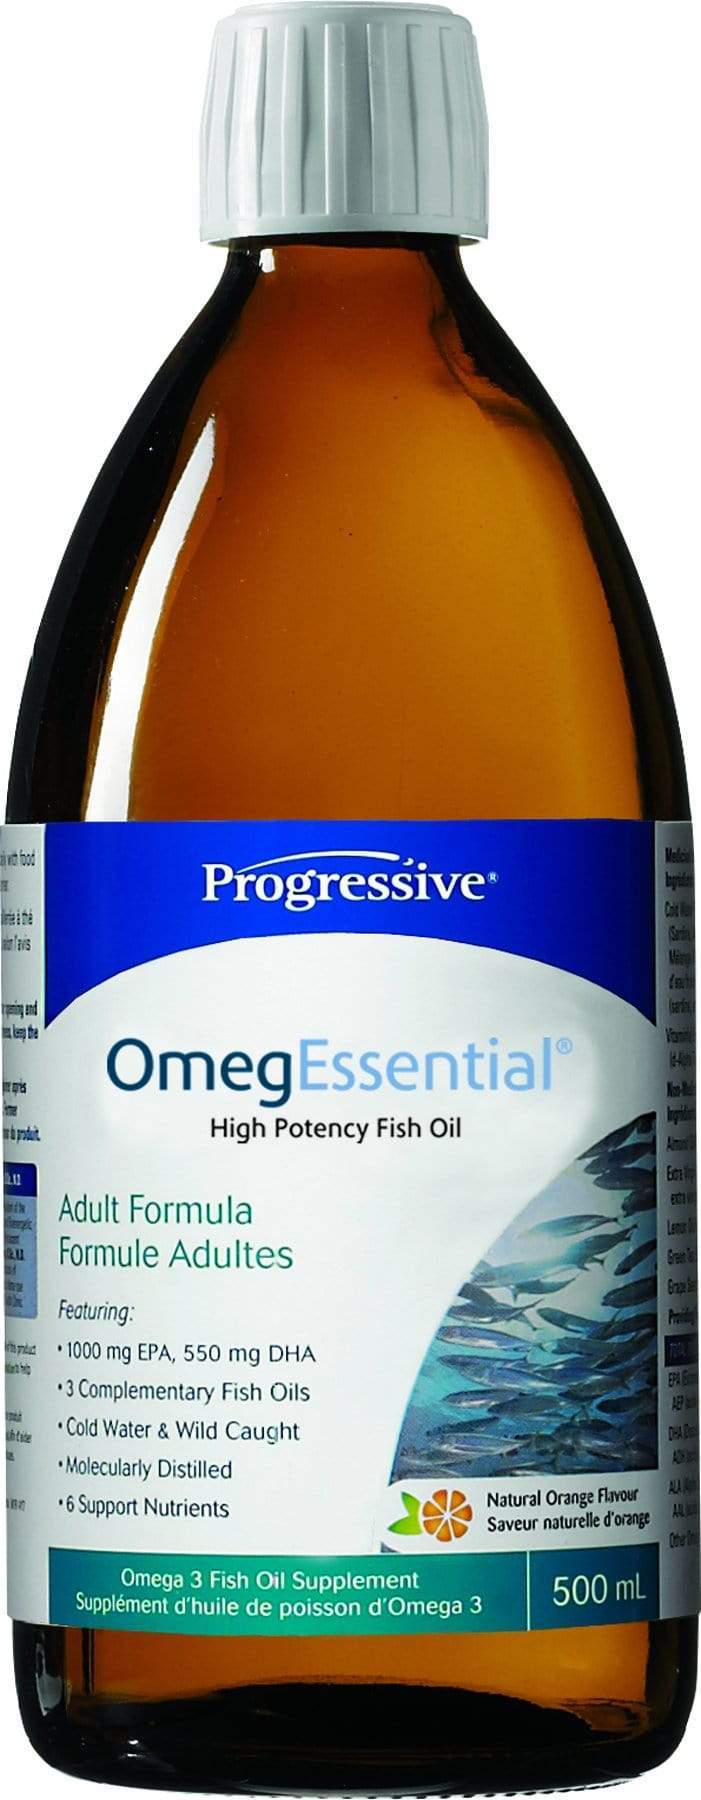 Progressive OmegEssential Fish Oil